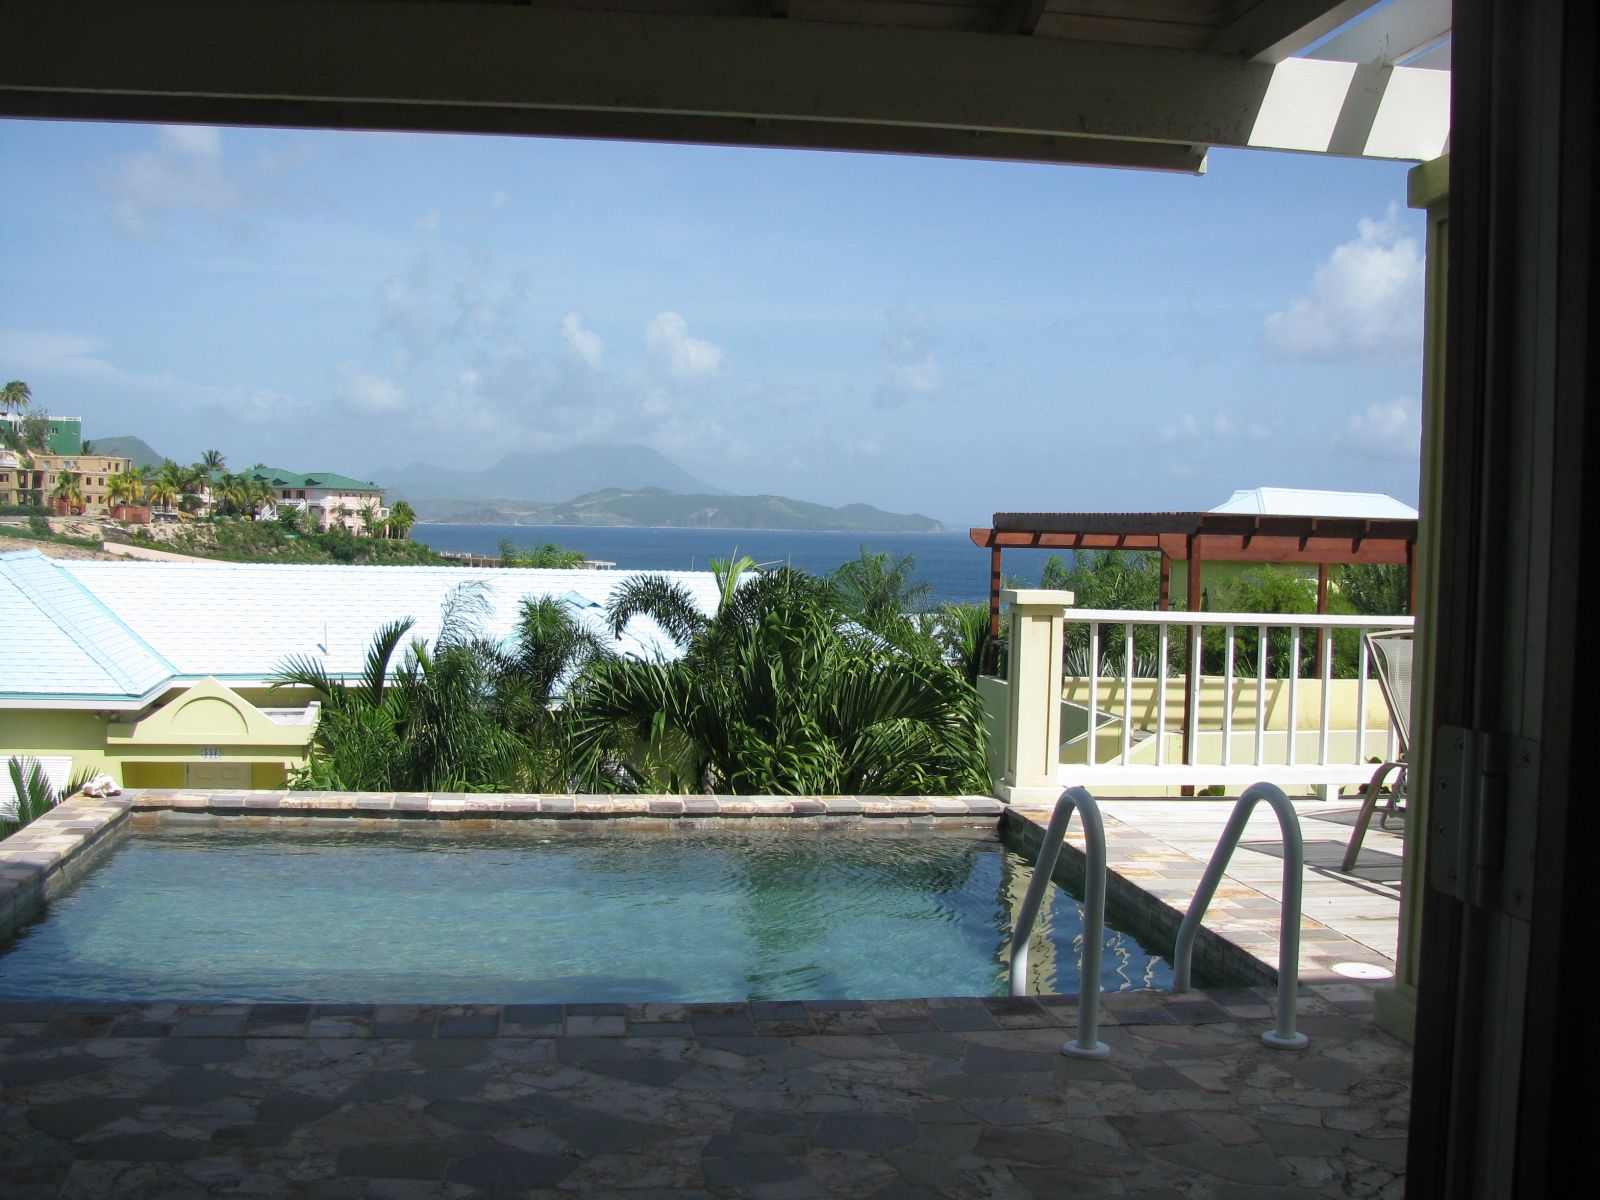 For Sale: 3 Bedroom Villa with Ocean View